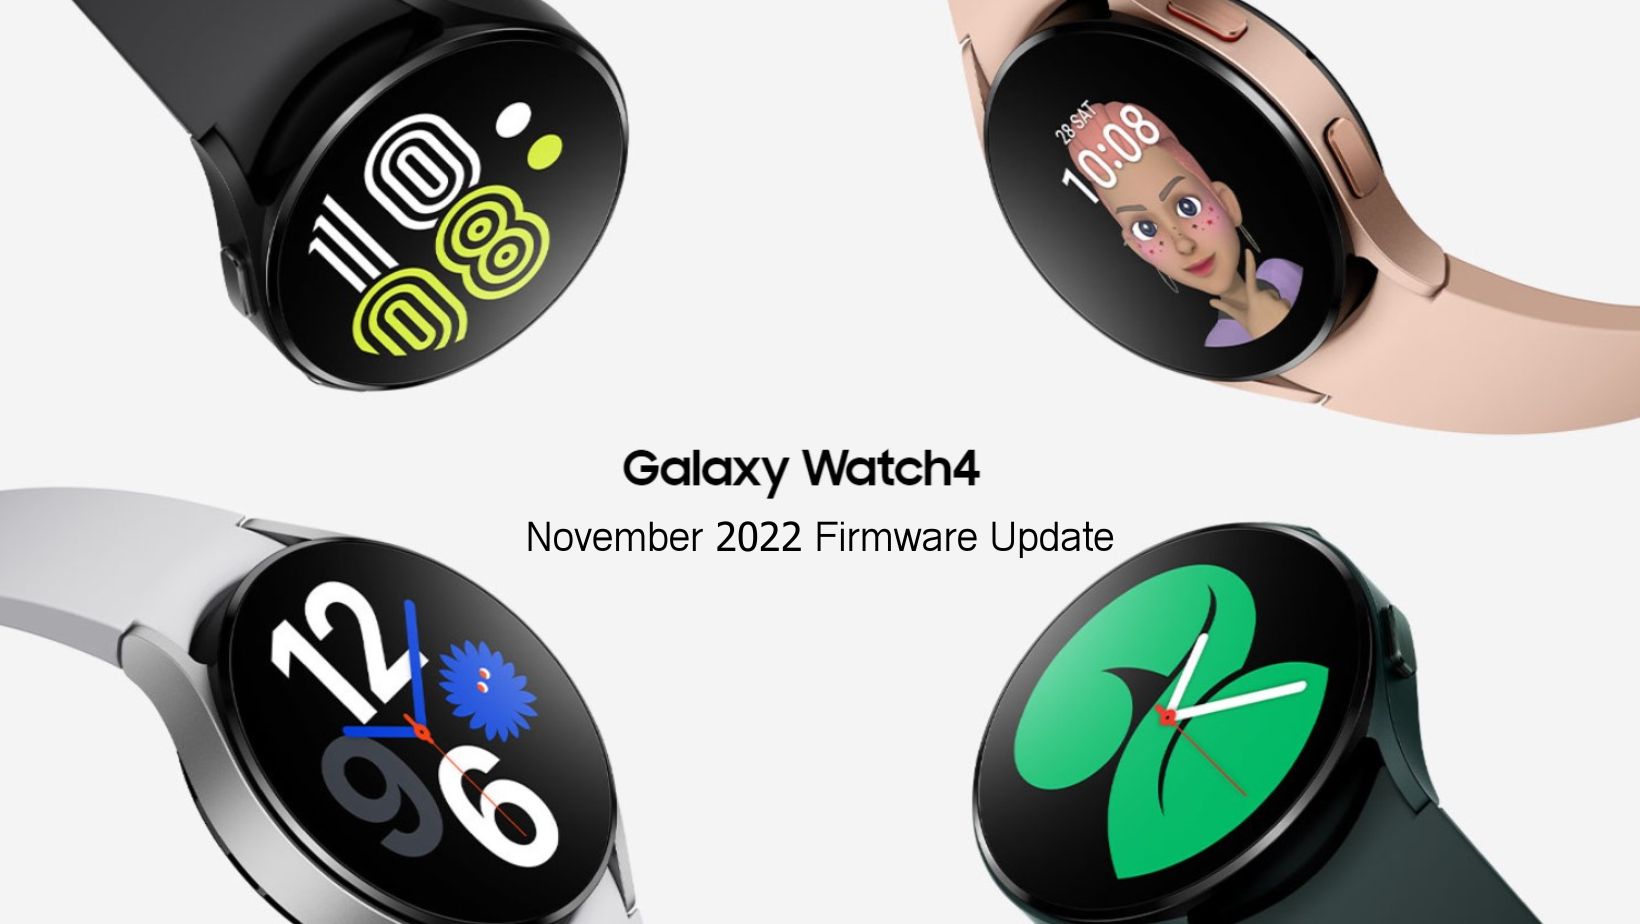 Samsung Galaxy Watch 4 November 2022 Hotfix Update Brick Issue Fixed